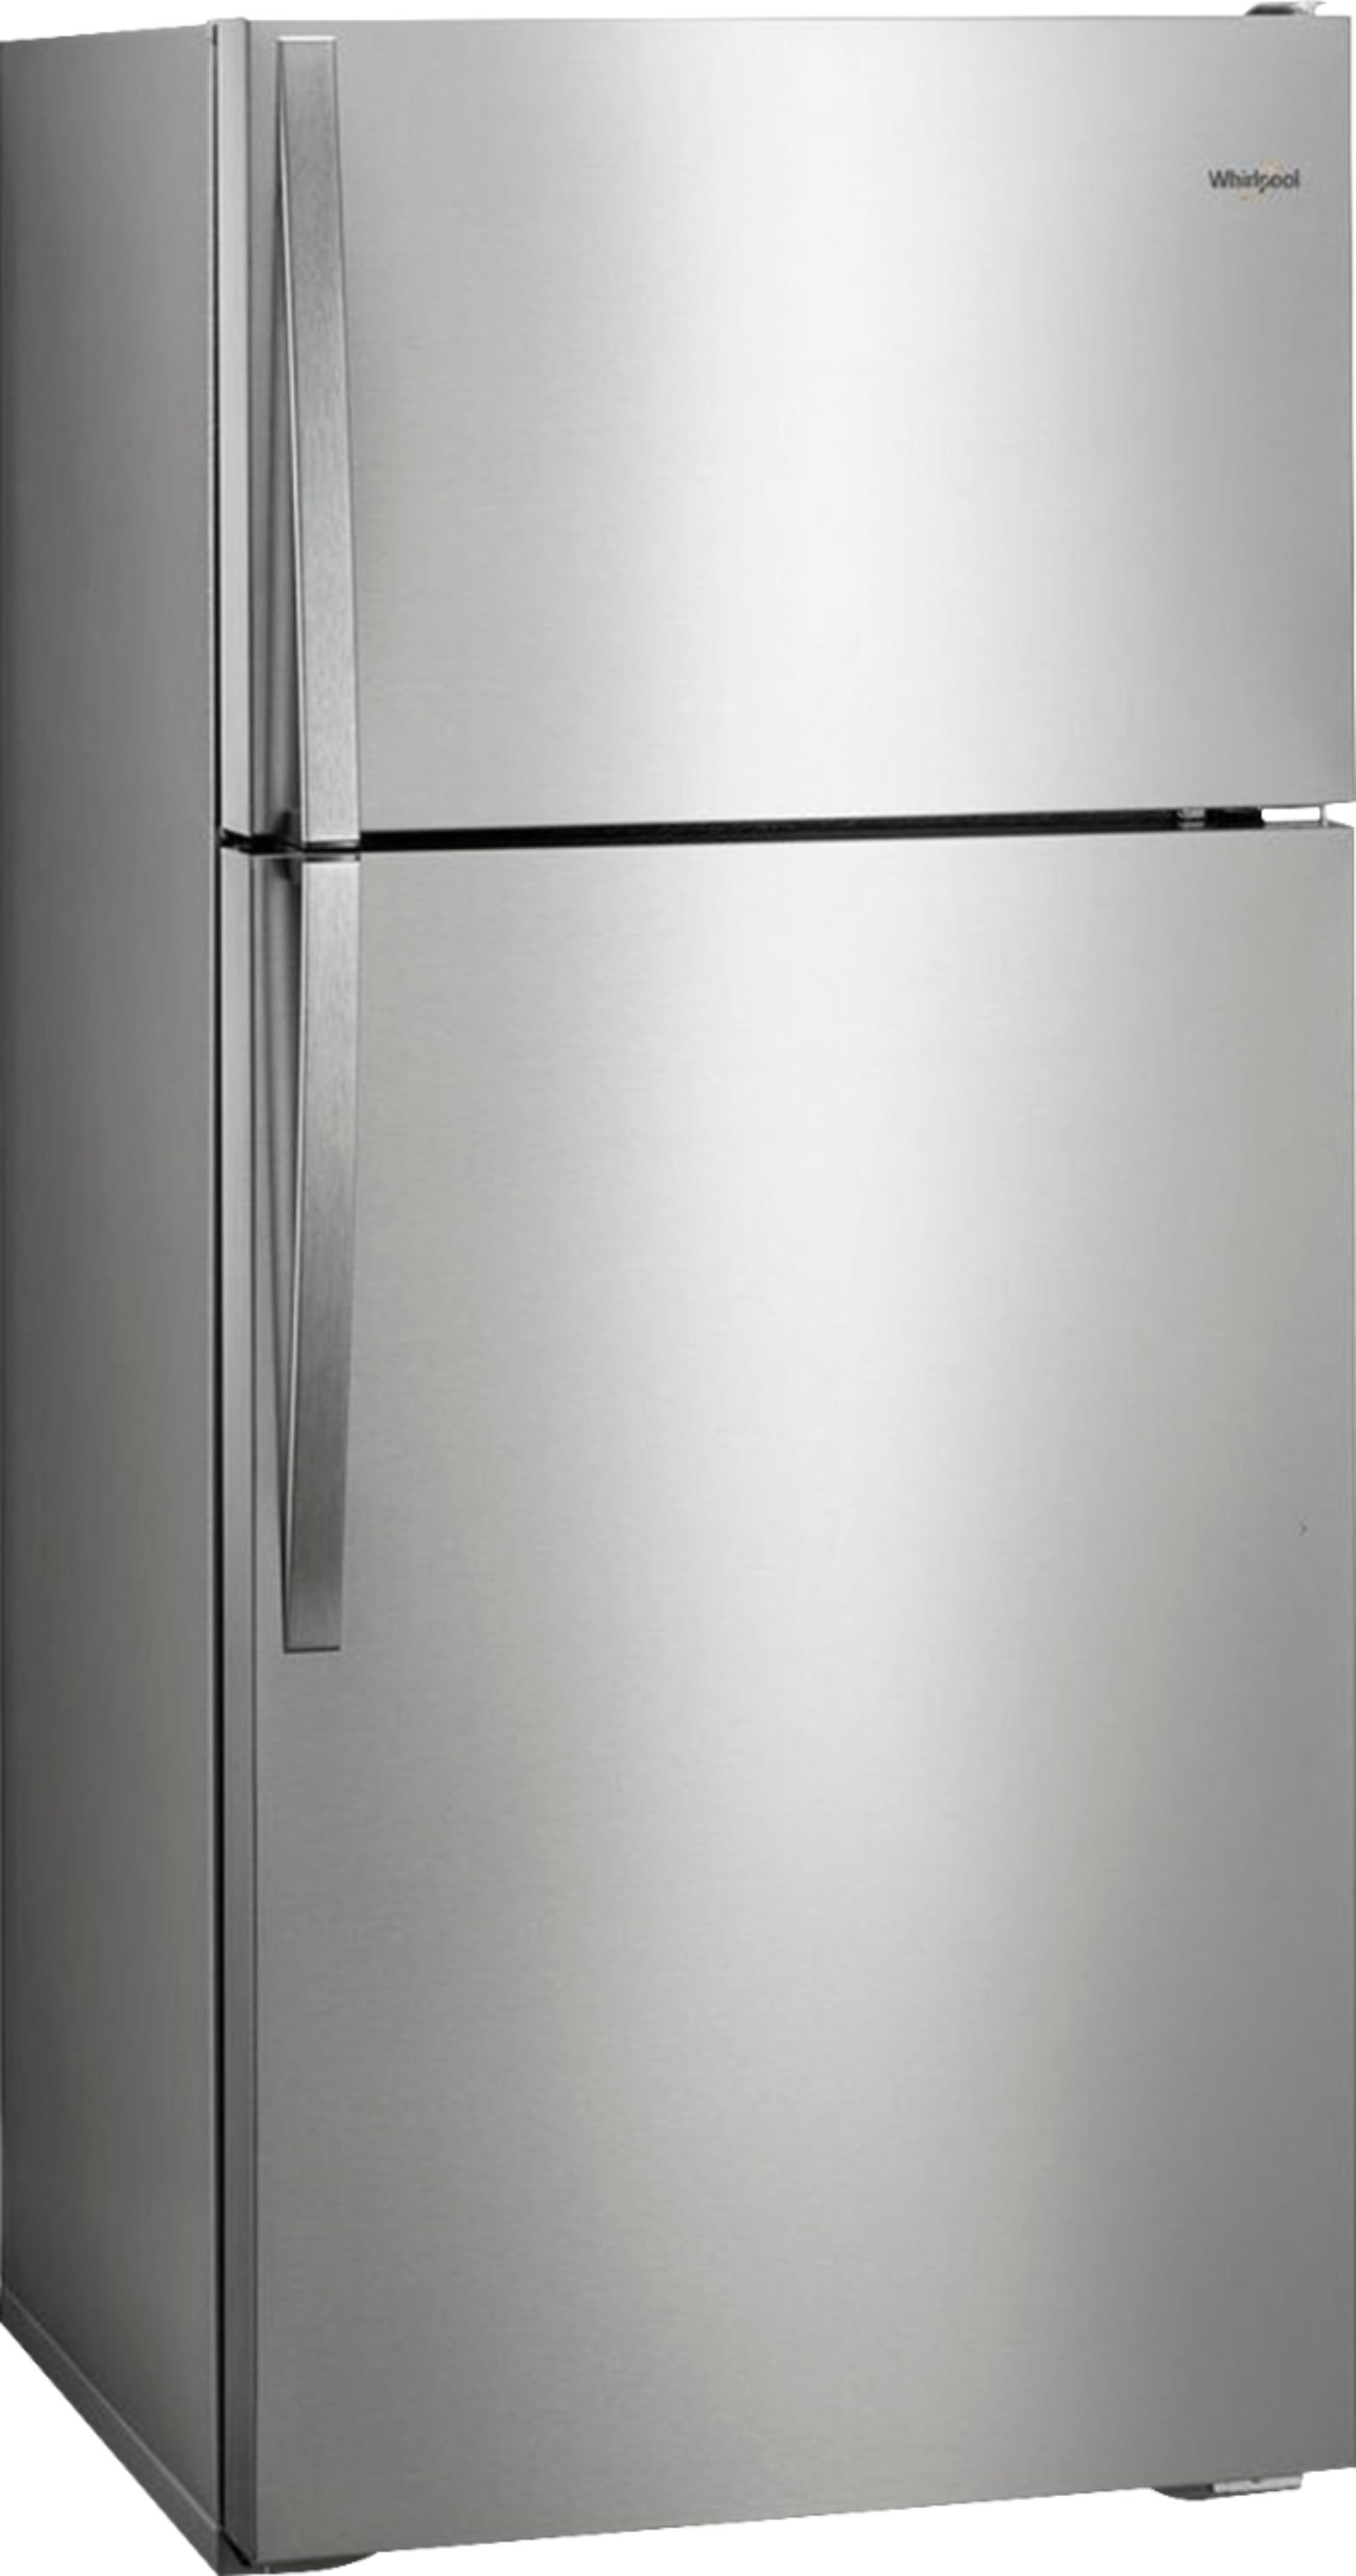 Angle View: Whirlpool - 19.1 Cu. Ft. Top-Freezer  Fingerprint Resistant Refrigerator - Metallic Steel